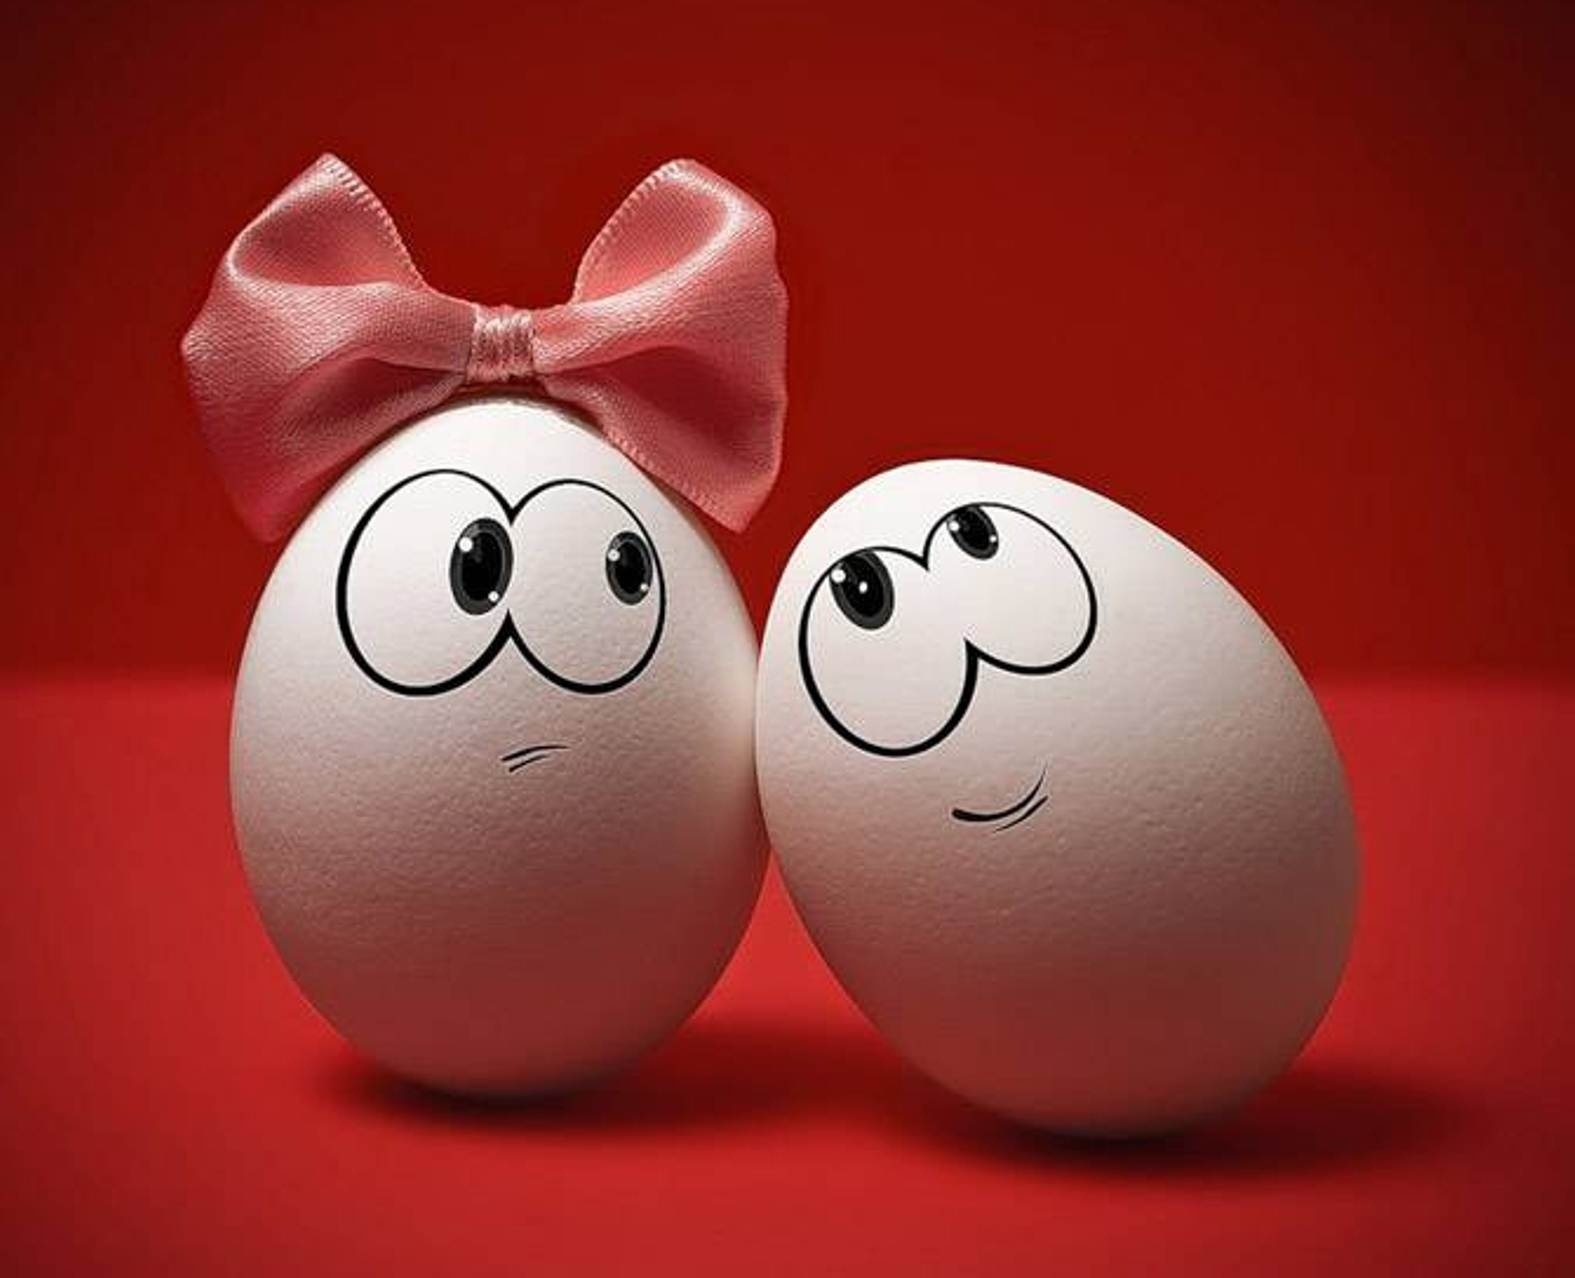 eggs, miscellanea, miscellaneous, couple, pair, bow, emotions